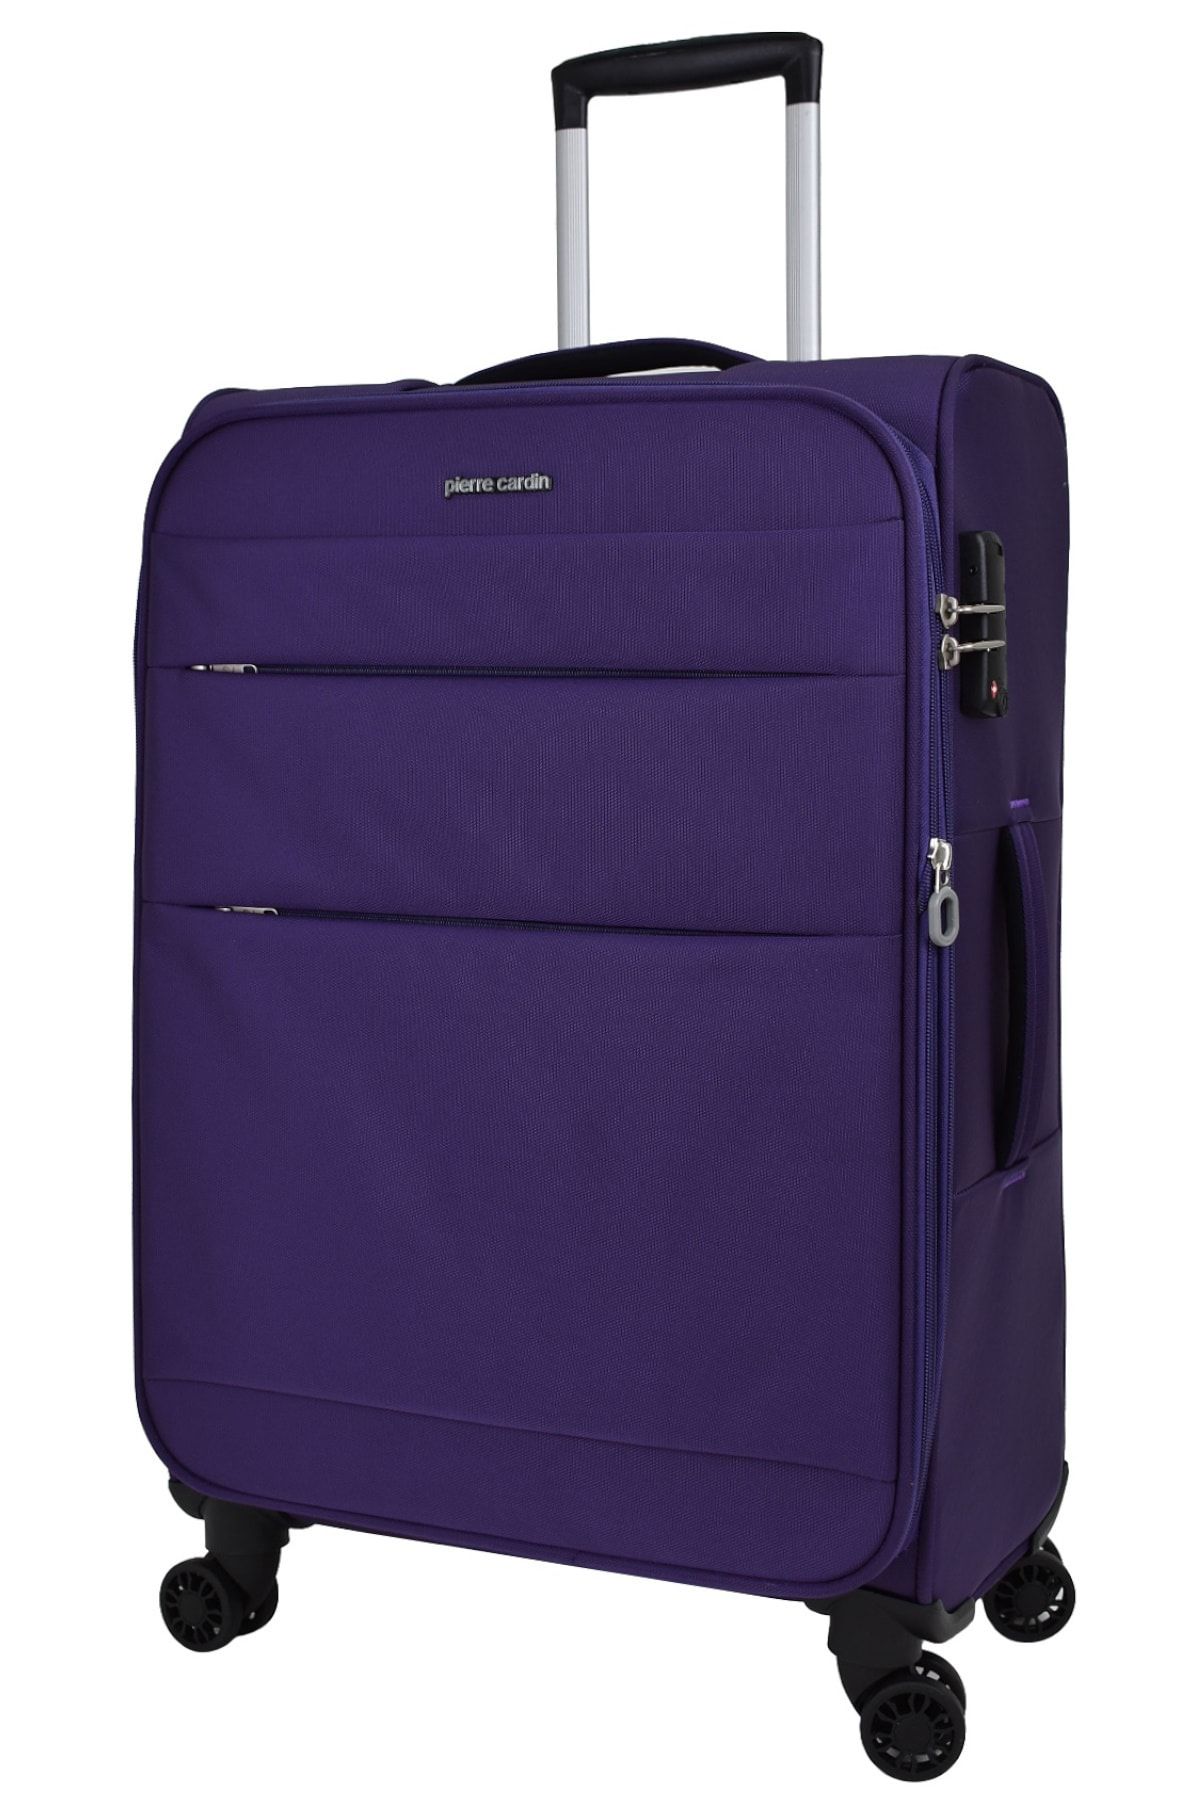 Pierre Cardin چمدان پارچه ای لوکس بسیار سبک و PC4200 TYCX9Q3H4N168846491966136